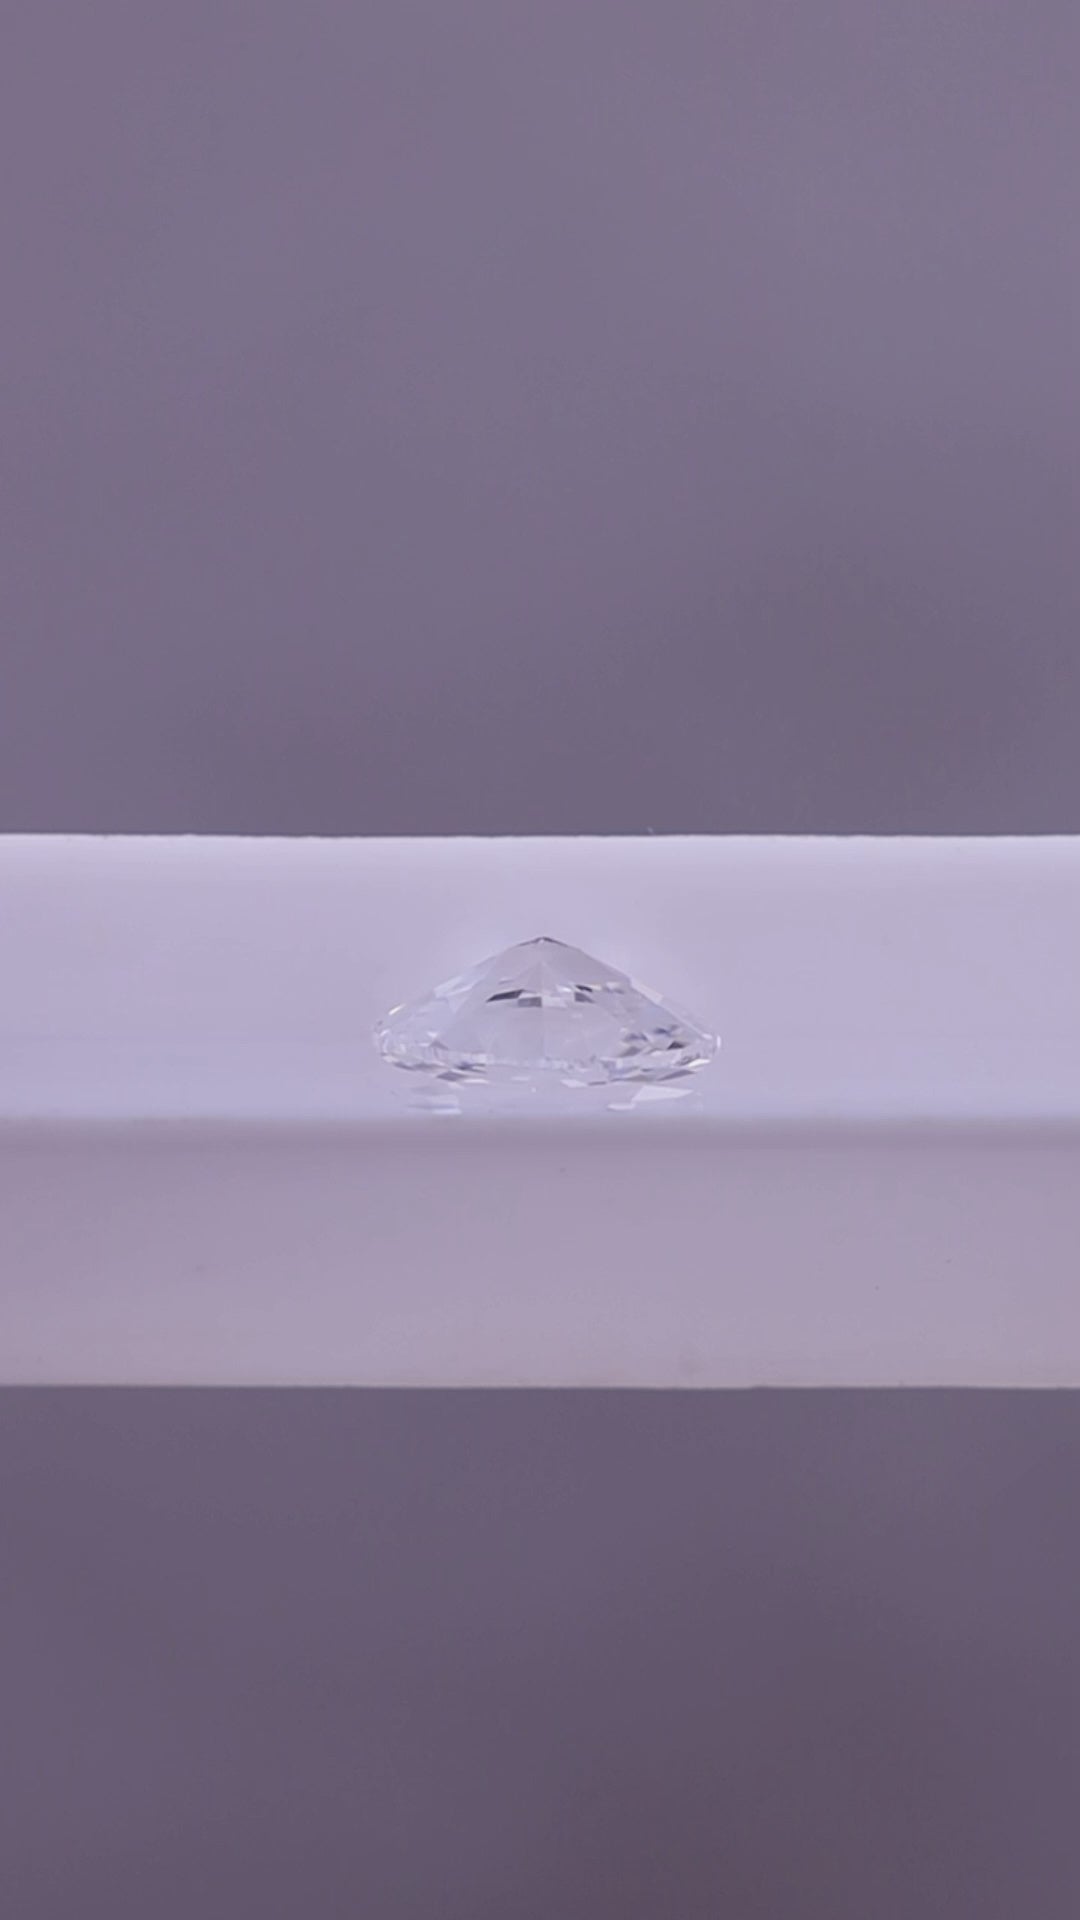 Unparalleled 5.02 Carat Oval Type IIa Diamond - Ultimate Investment